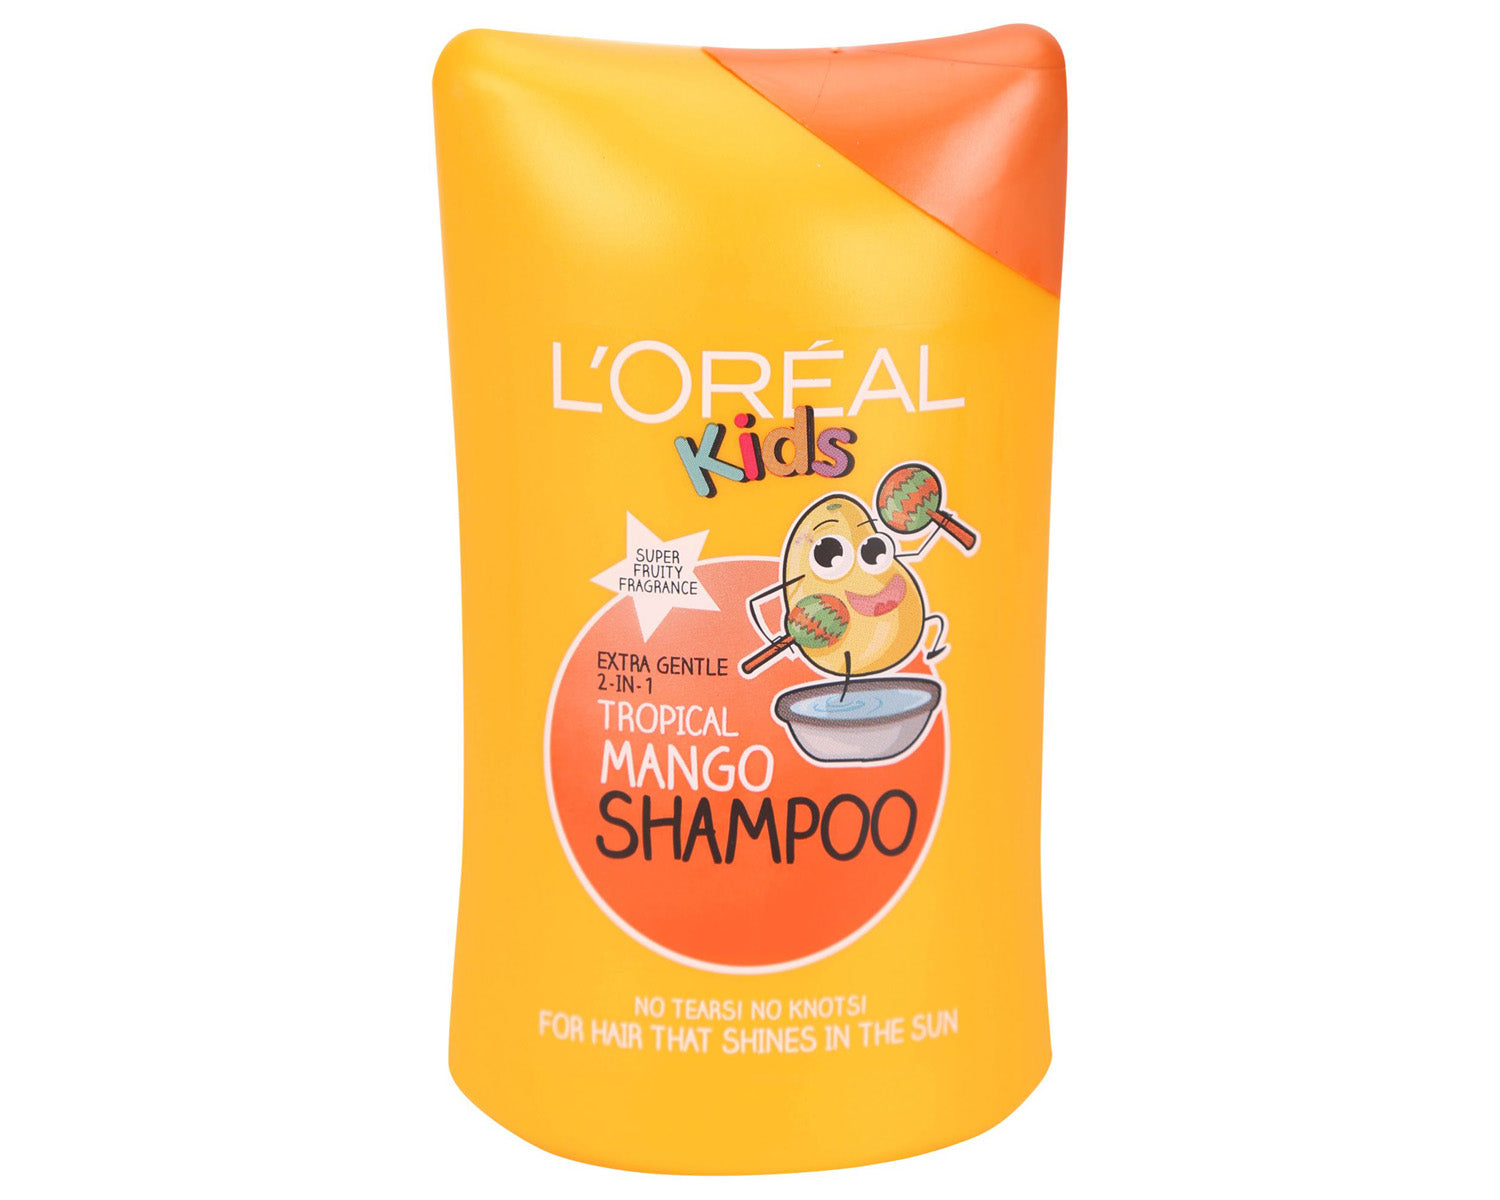 Loreal Kids Very Berry Tropical Mango Shampoo Extra Gentle 2-in-1 250 ml - Baby Moo